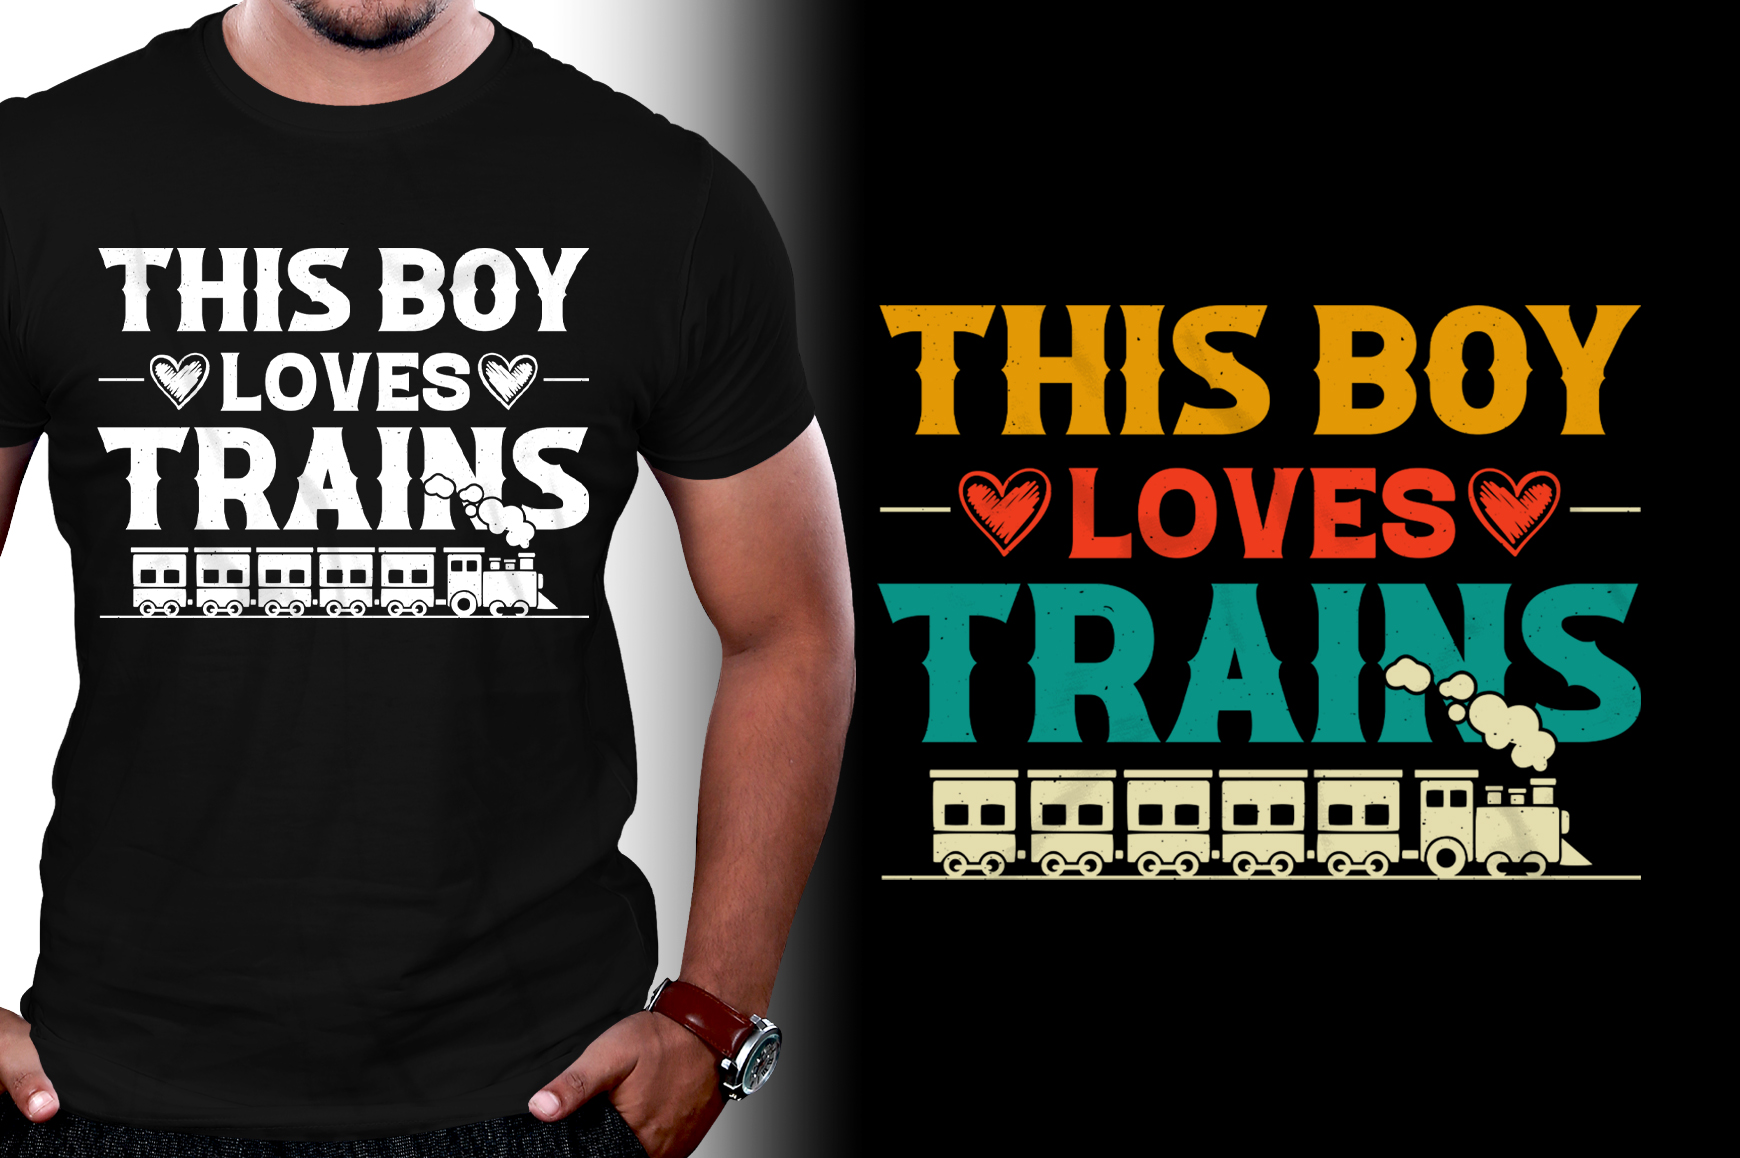 This Boy Loves Trains T-Shirt Design - Buy t-shirt designs